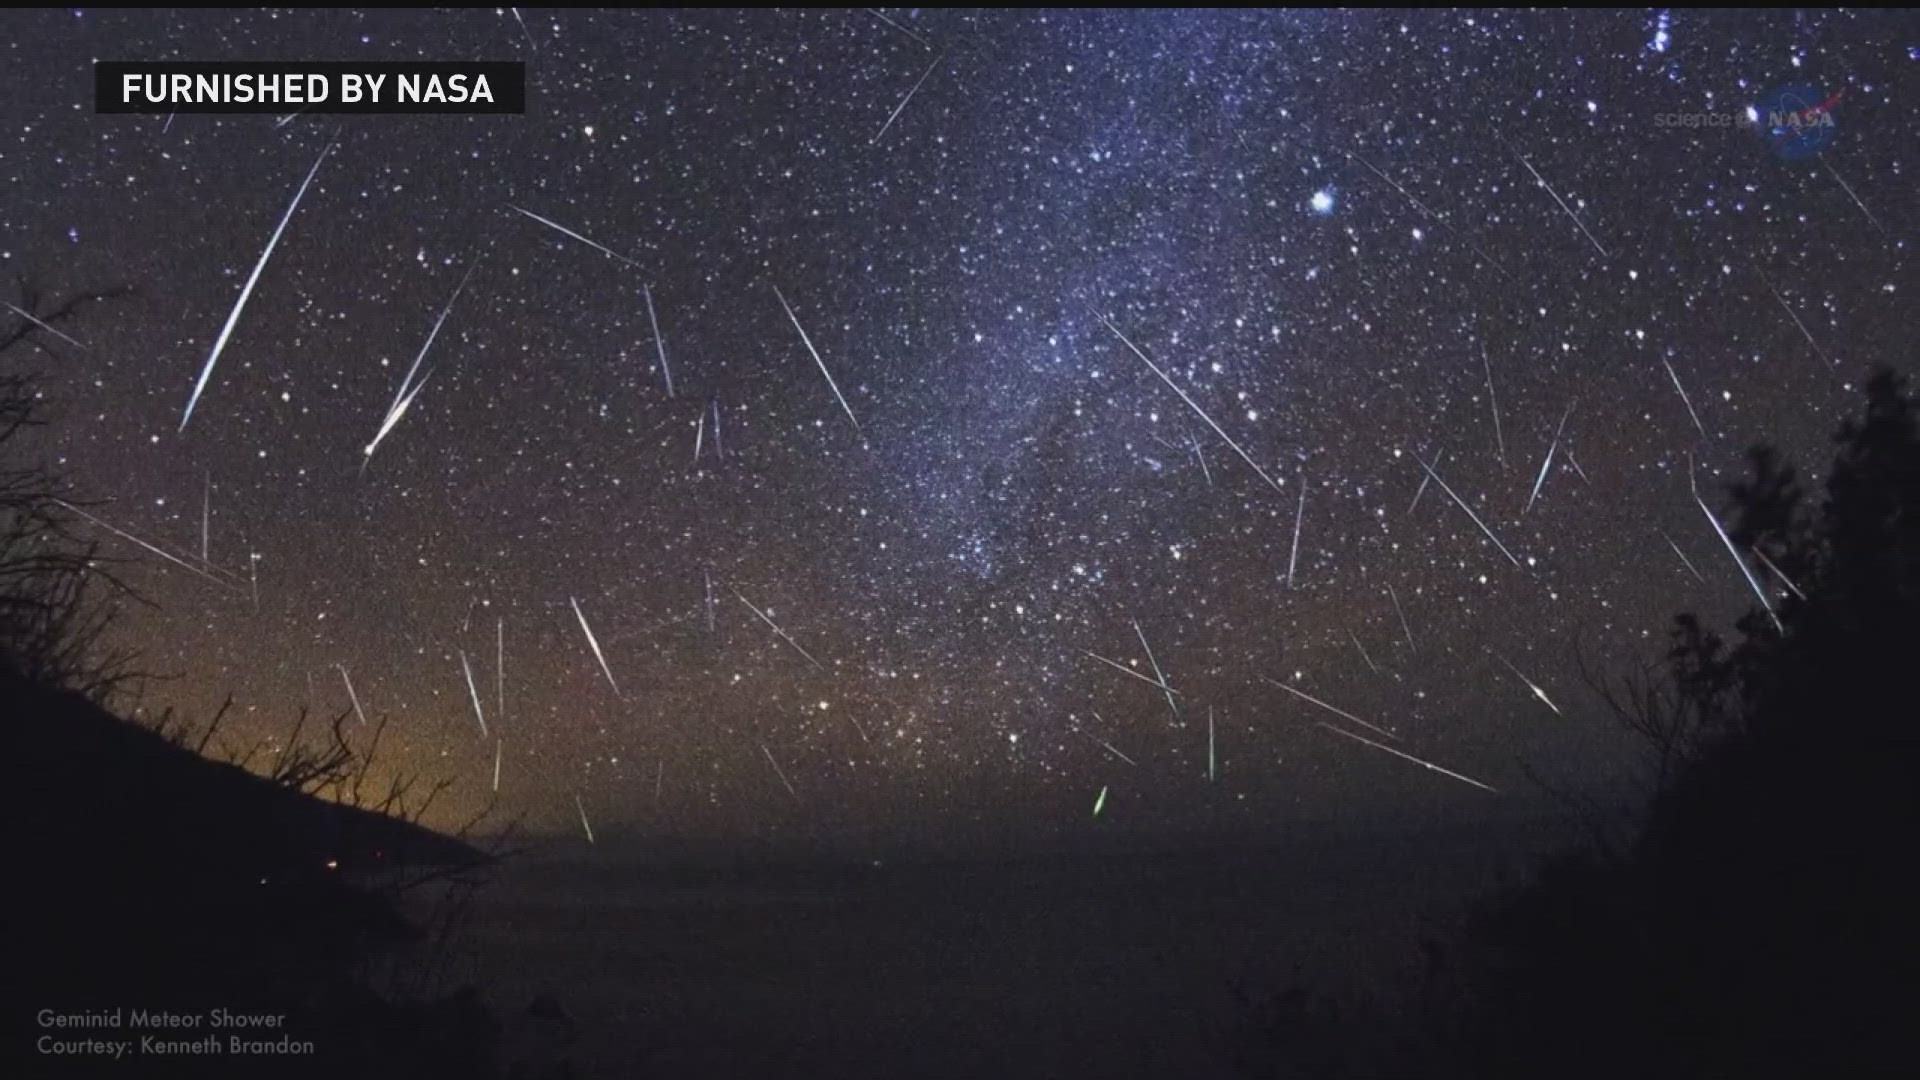 When does the Perseid meteor shower peak?